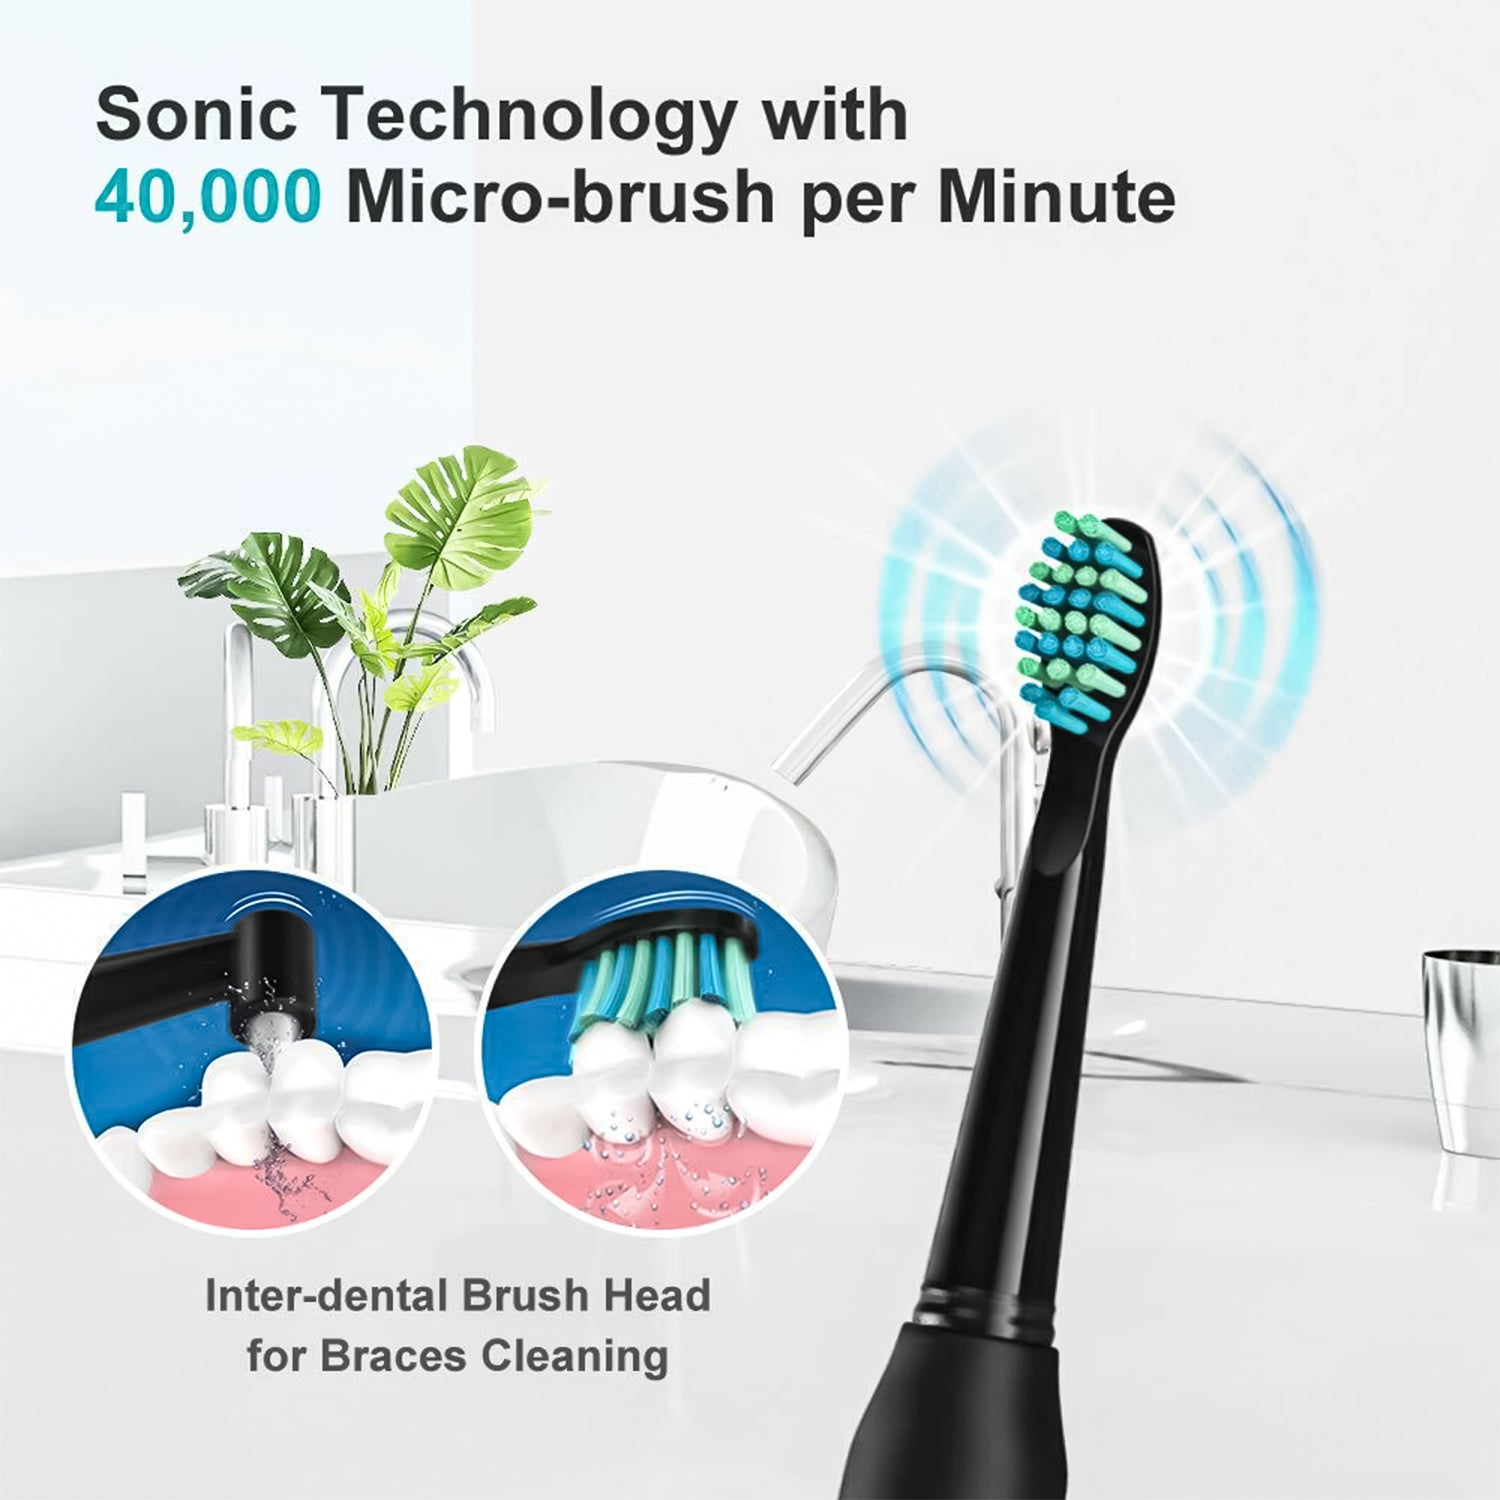 Electric toothbrush sale uk